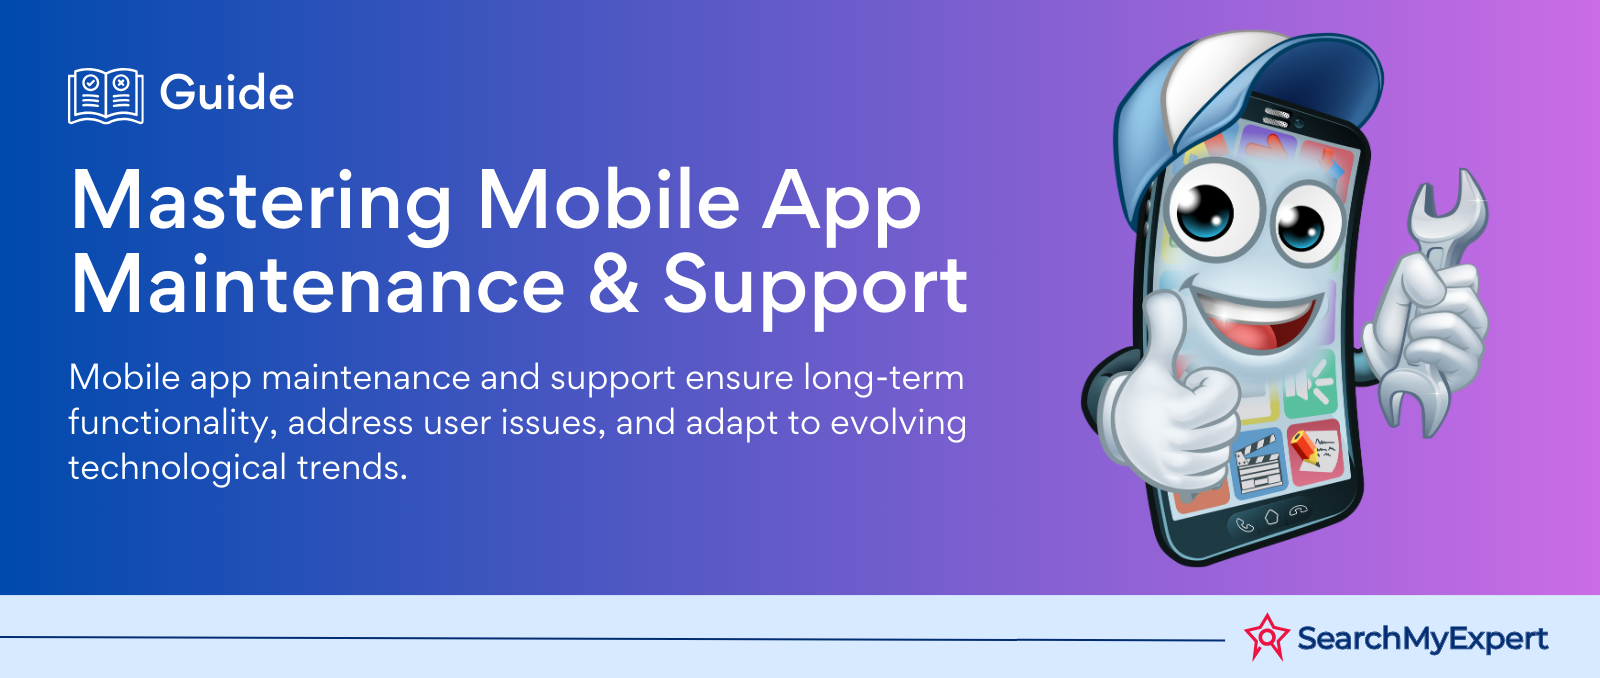 Mastering Mobile App Maintenance & Support